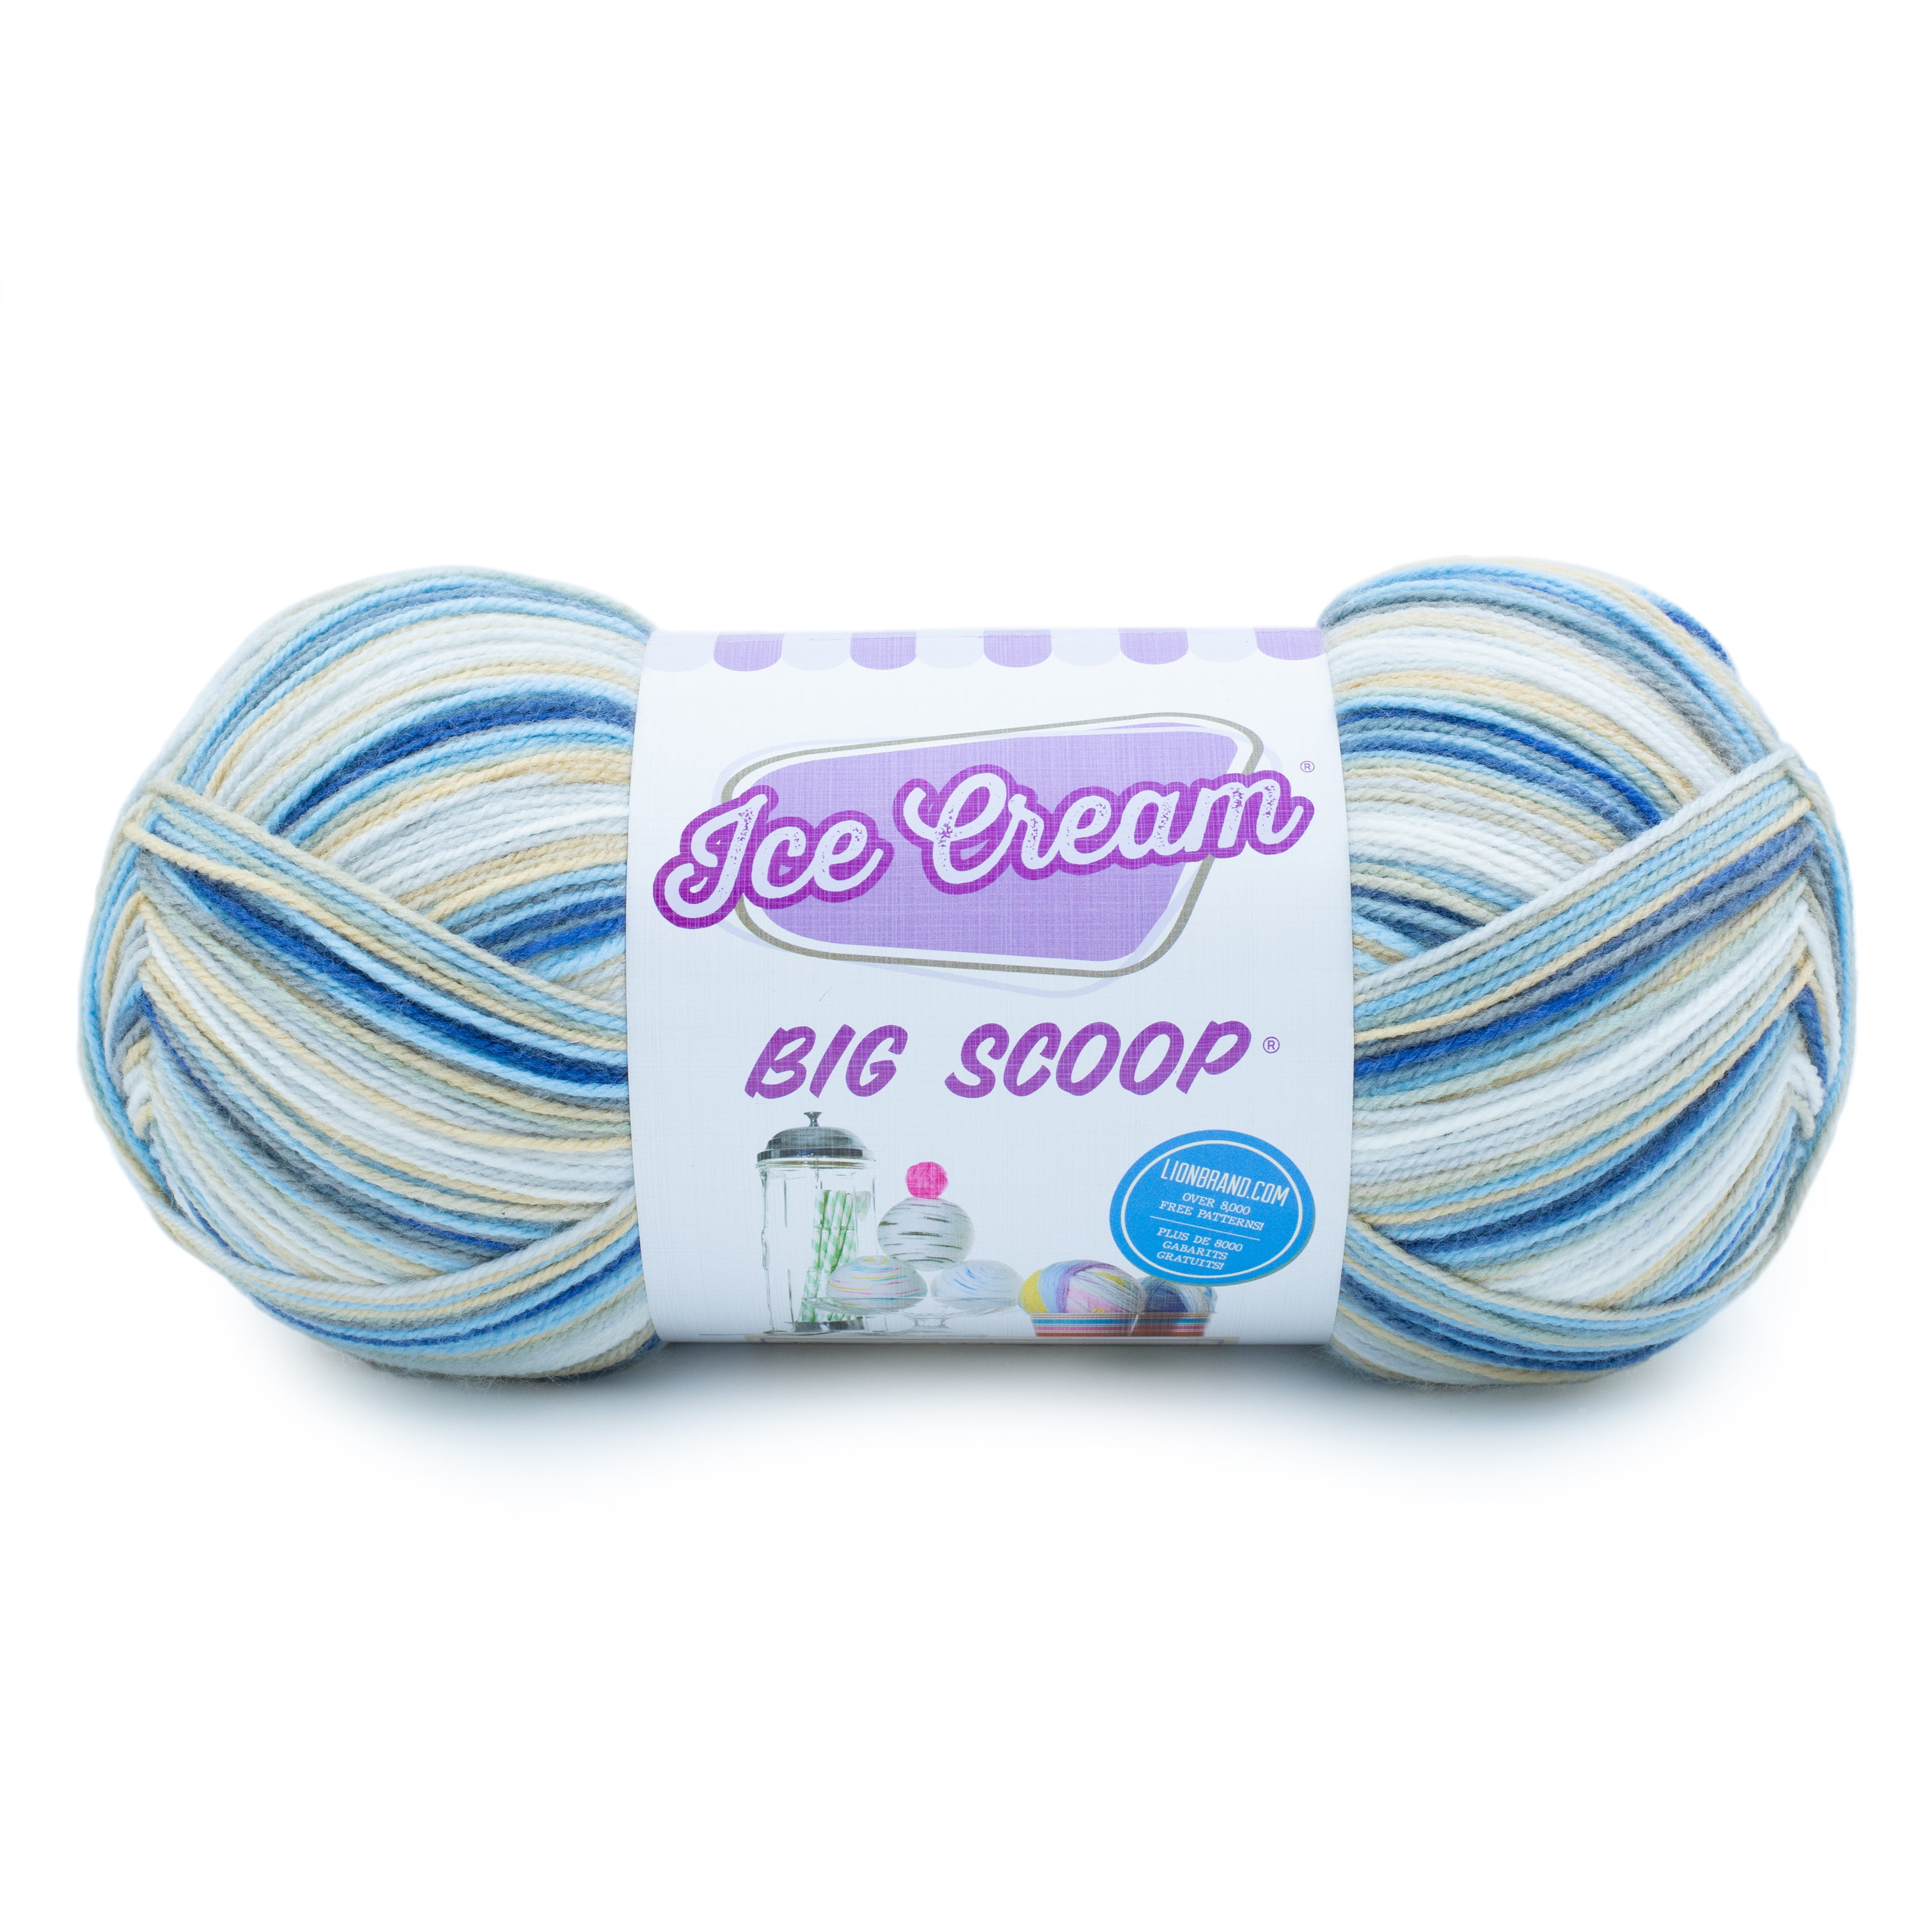 Lion Brand Yarn Ice Cream Big Scoop Lemon Meringue Light Acrylic  Multi-color Yarn 1 Pack 